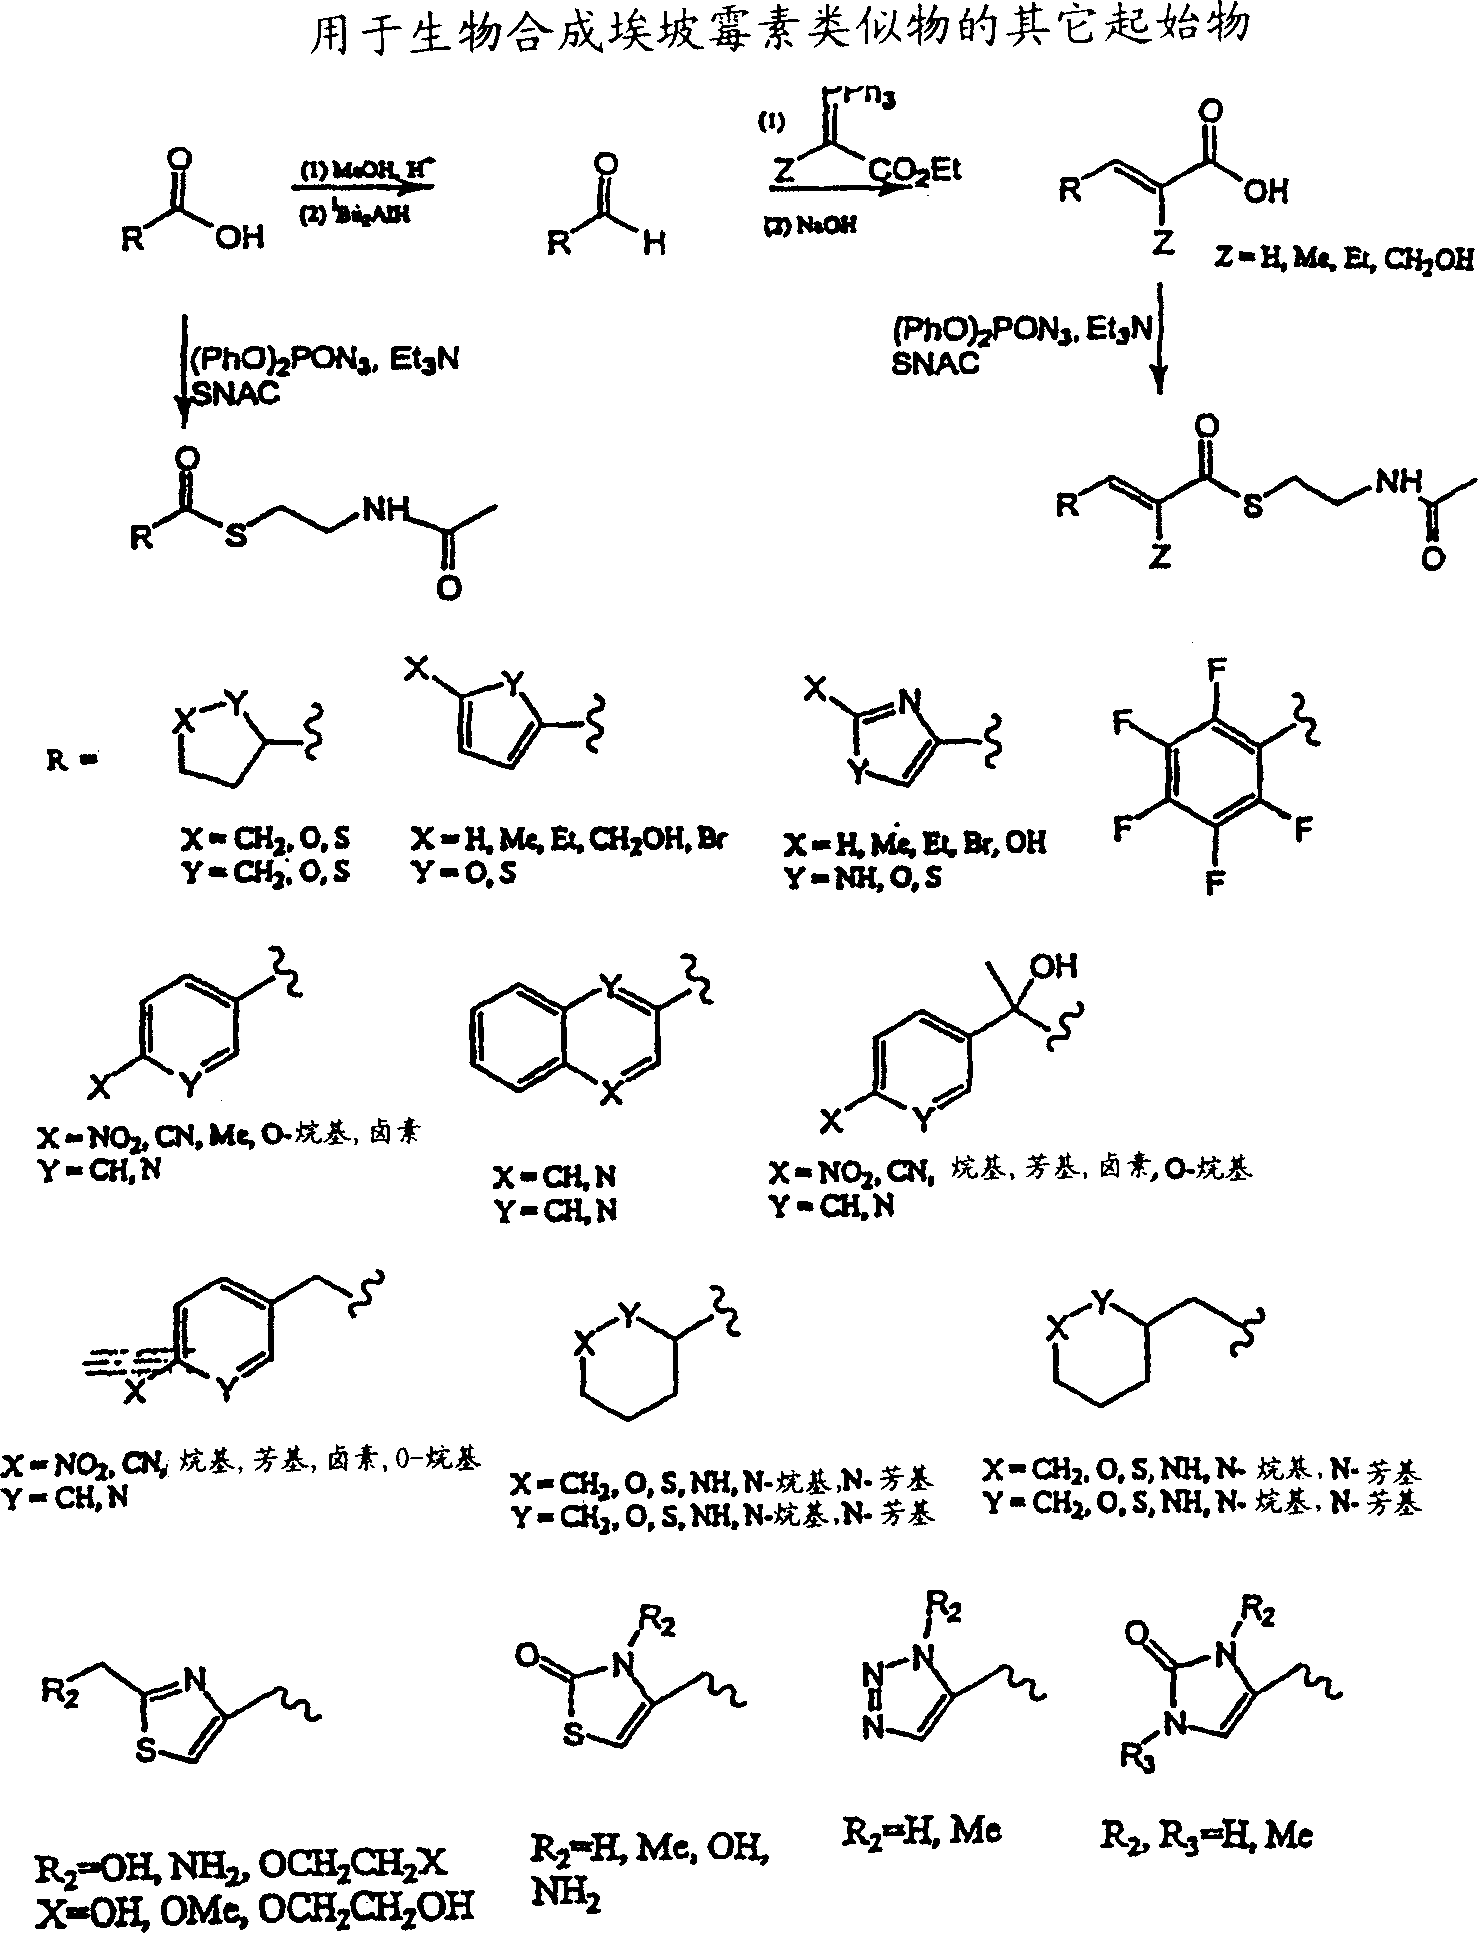 Production of polyketides